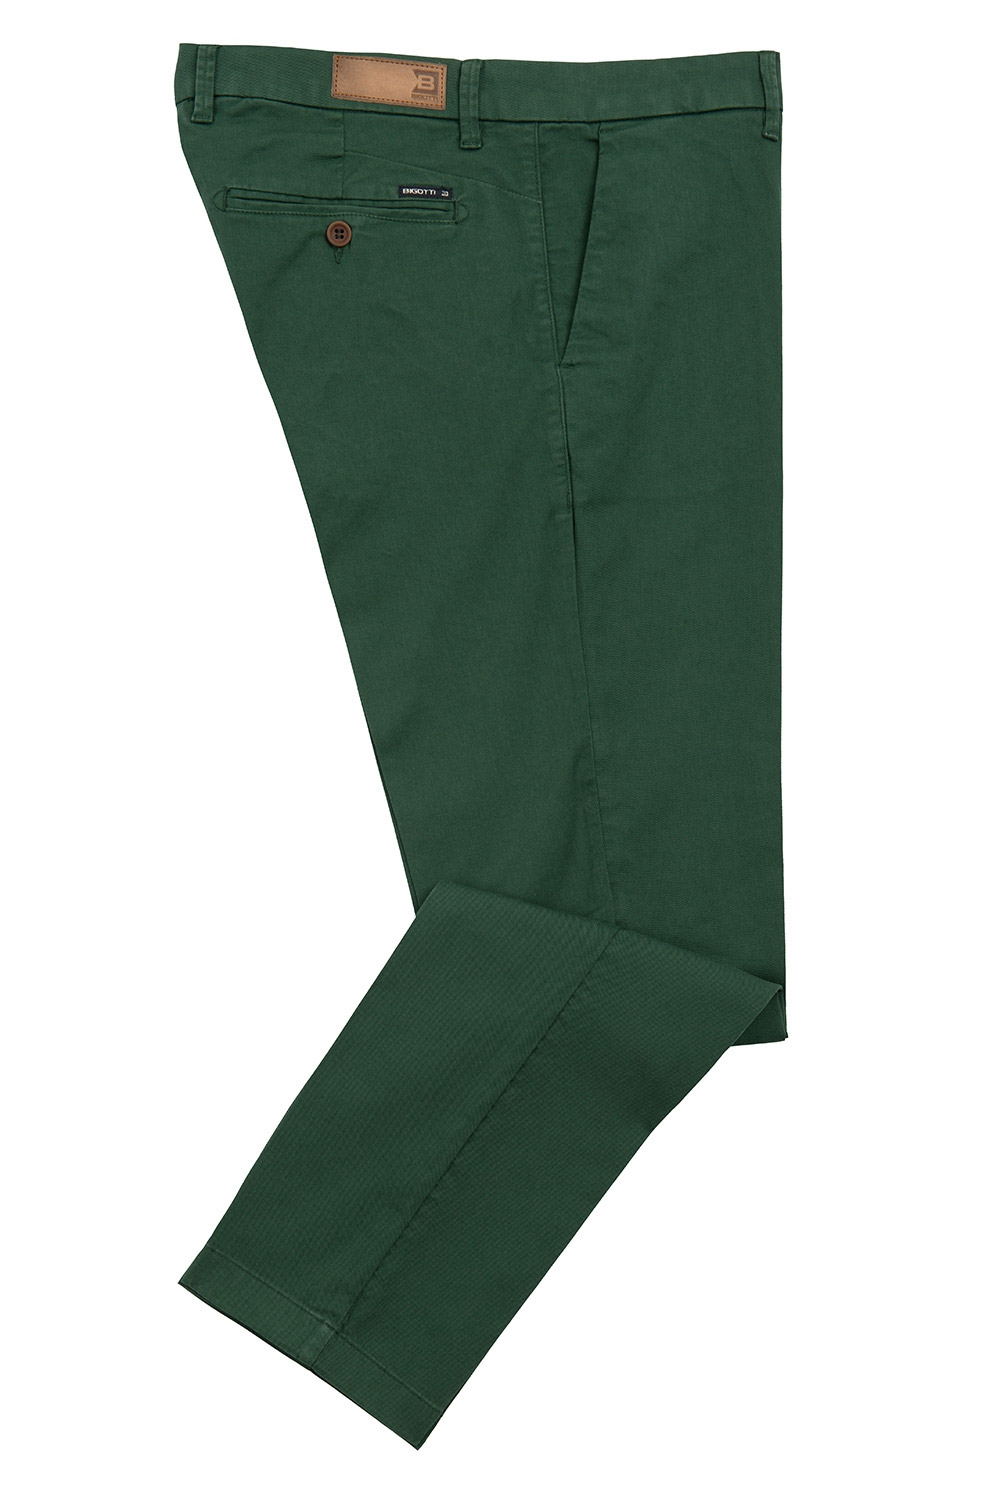 Pantaloni superslim marco verde uni 1